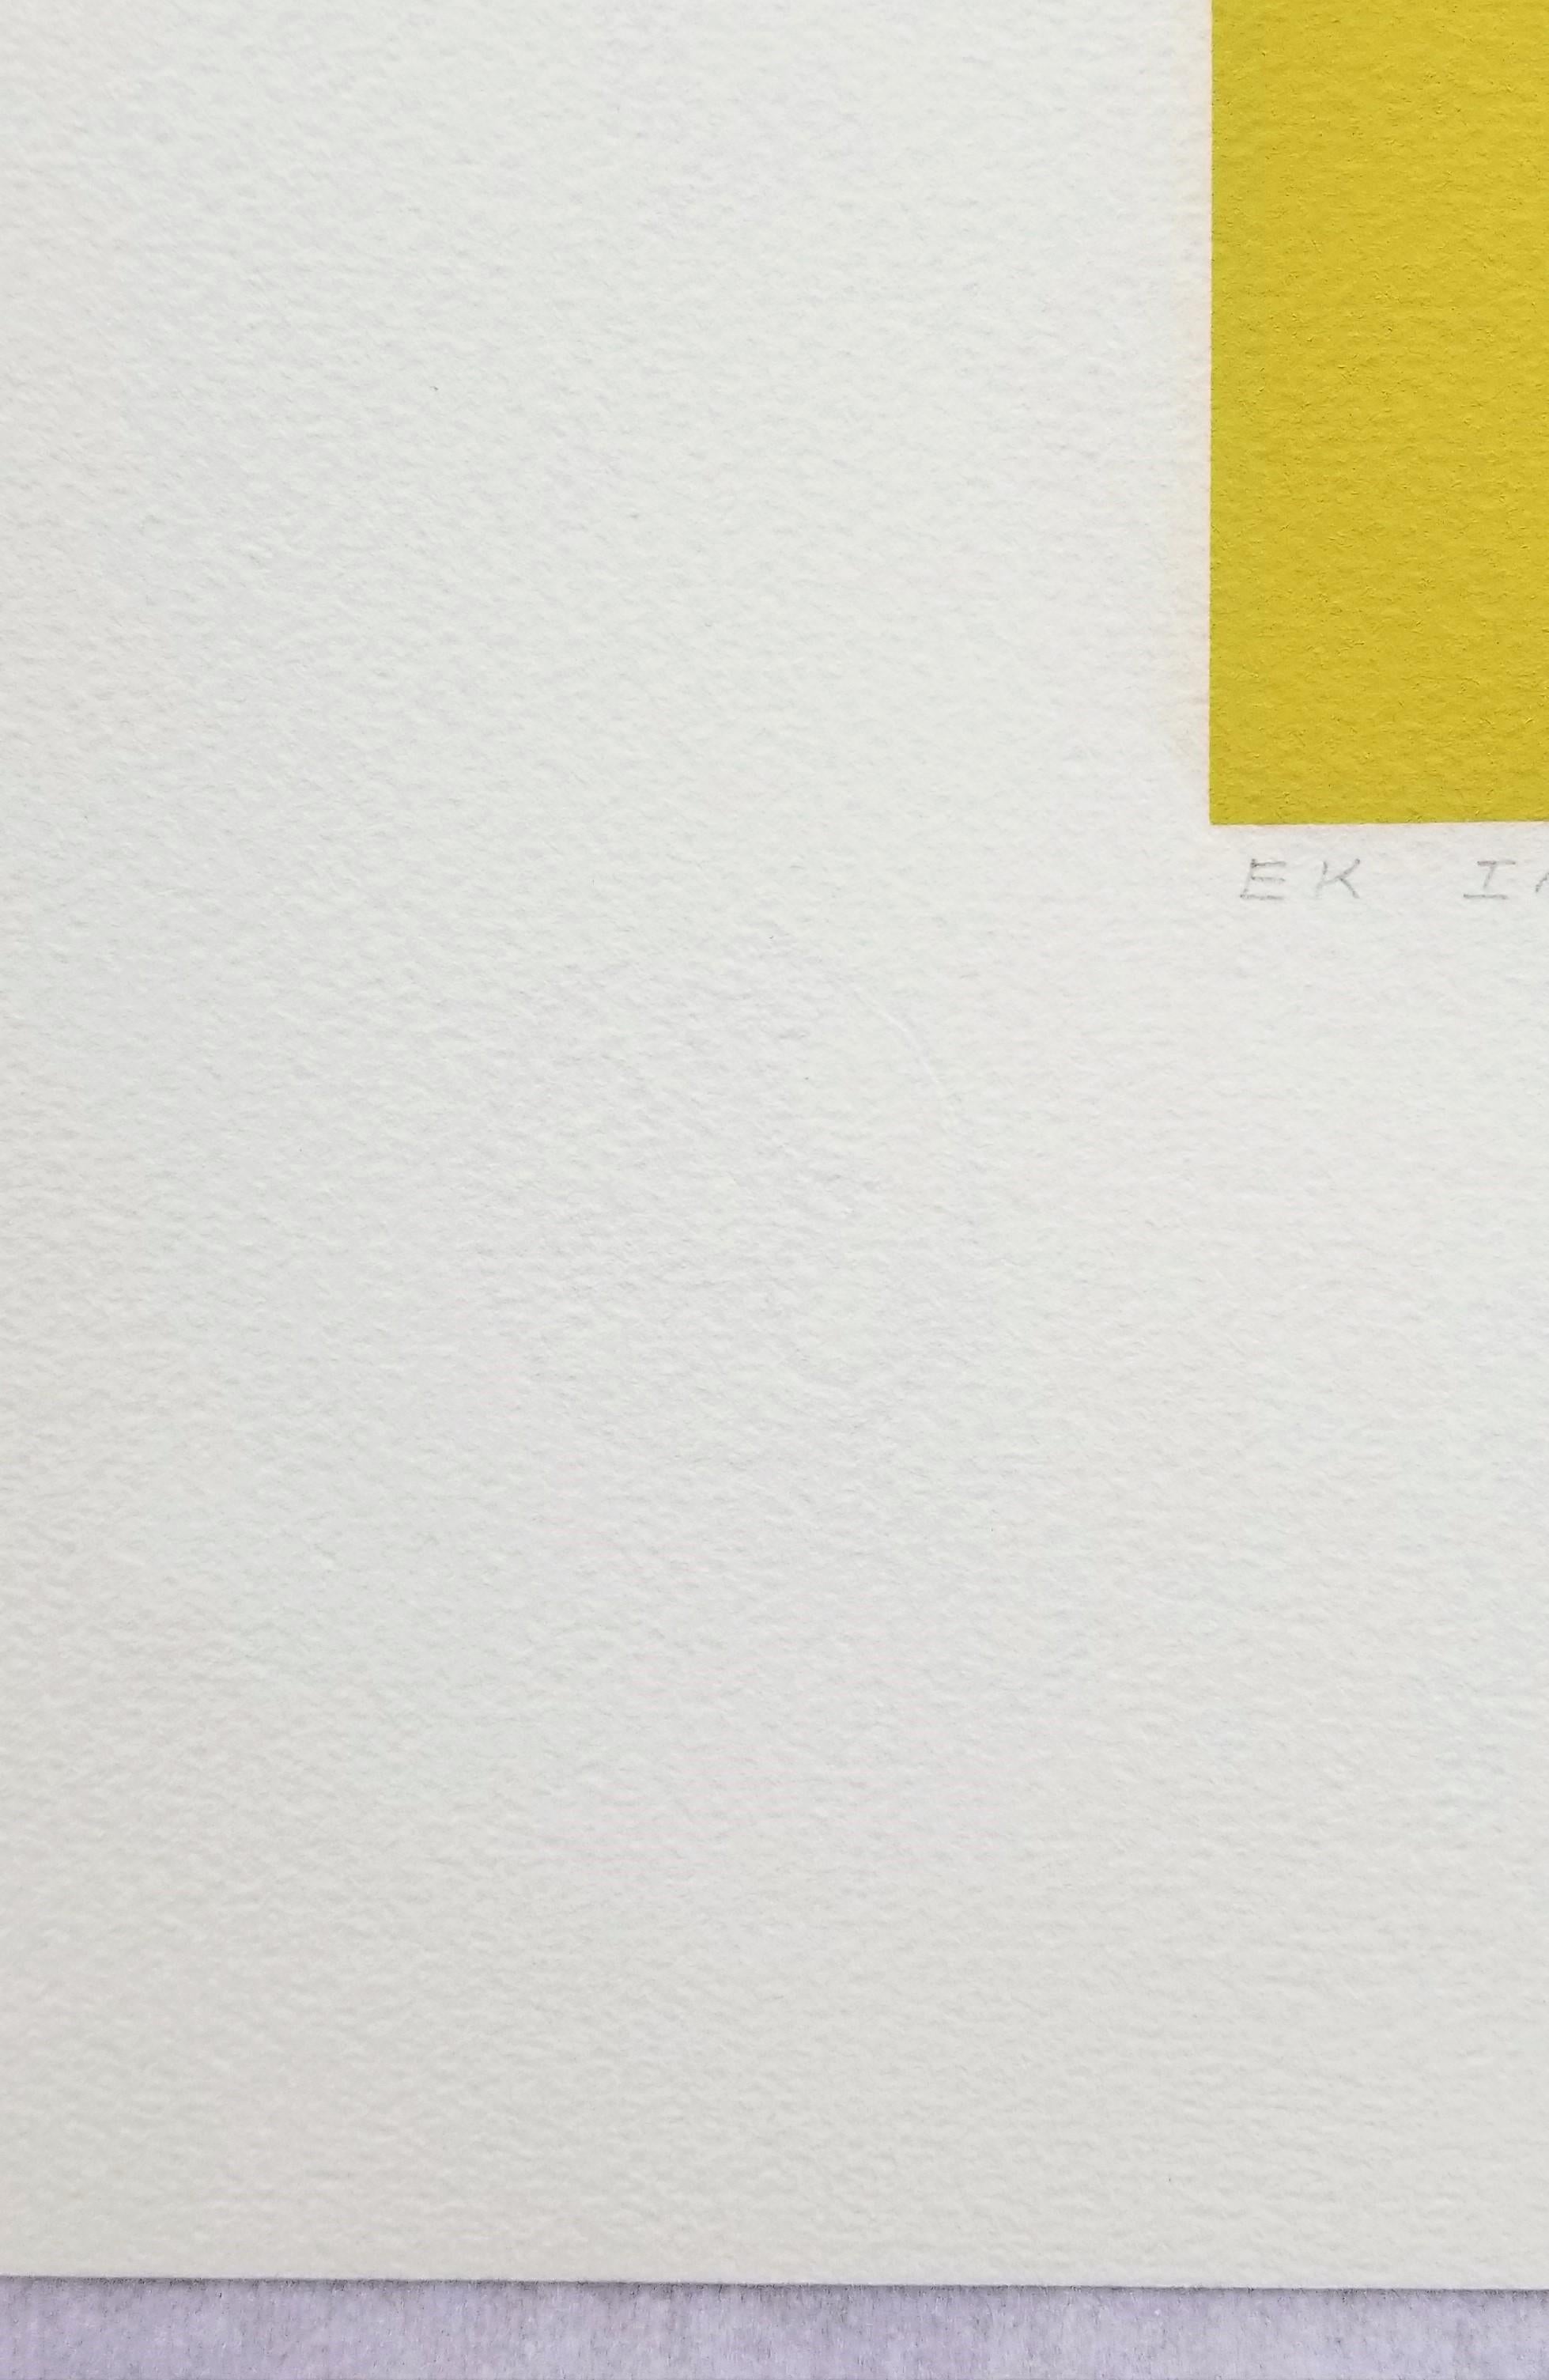 EK Ic /// Bauhaus Abstract Geometric Josef Albers Minimalism Yellow Screenprint For Sale 8